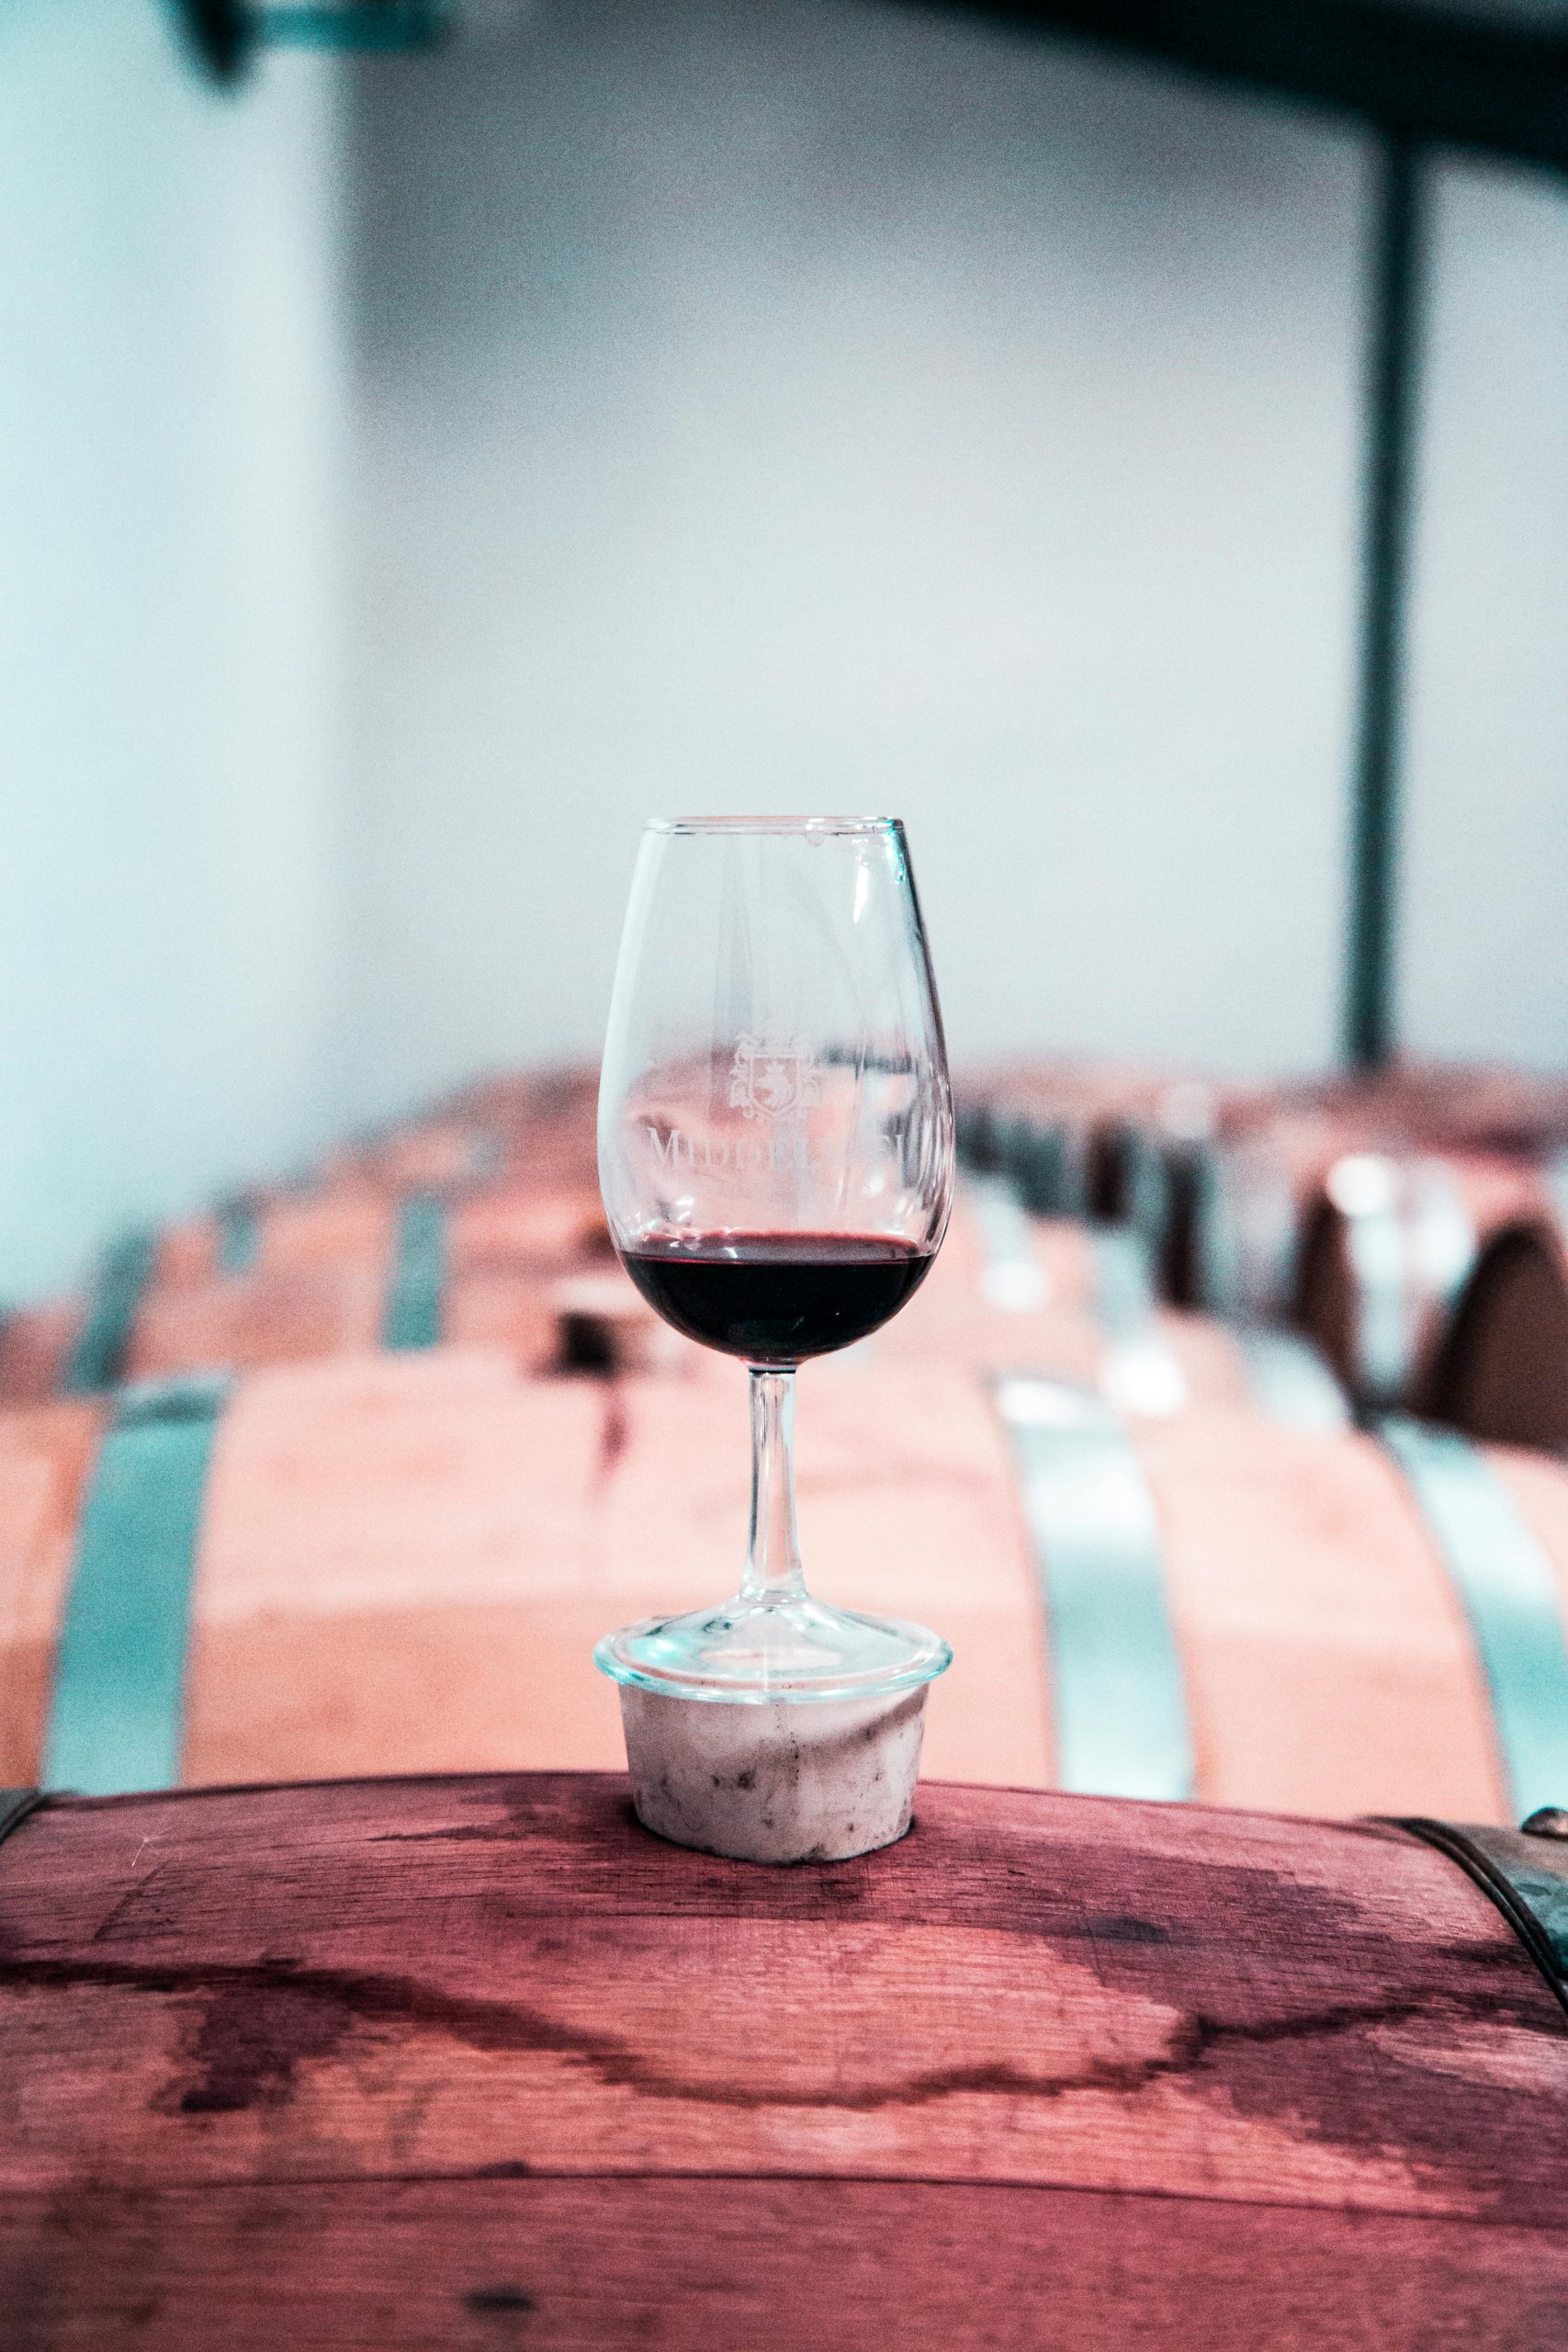 Benefits of corporate wine tasting